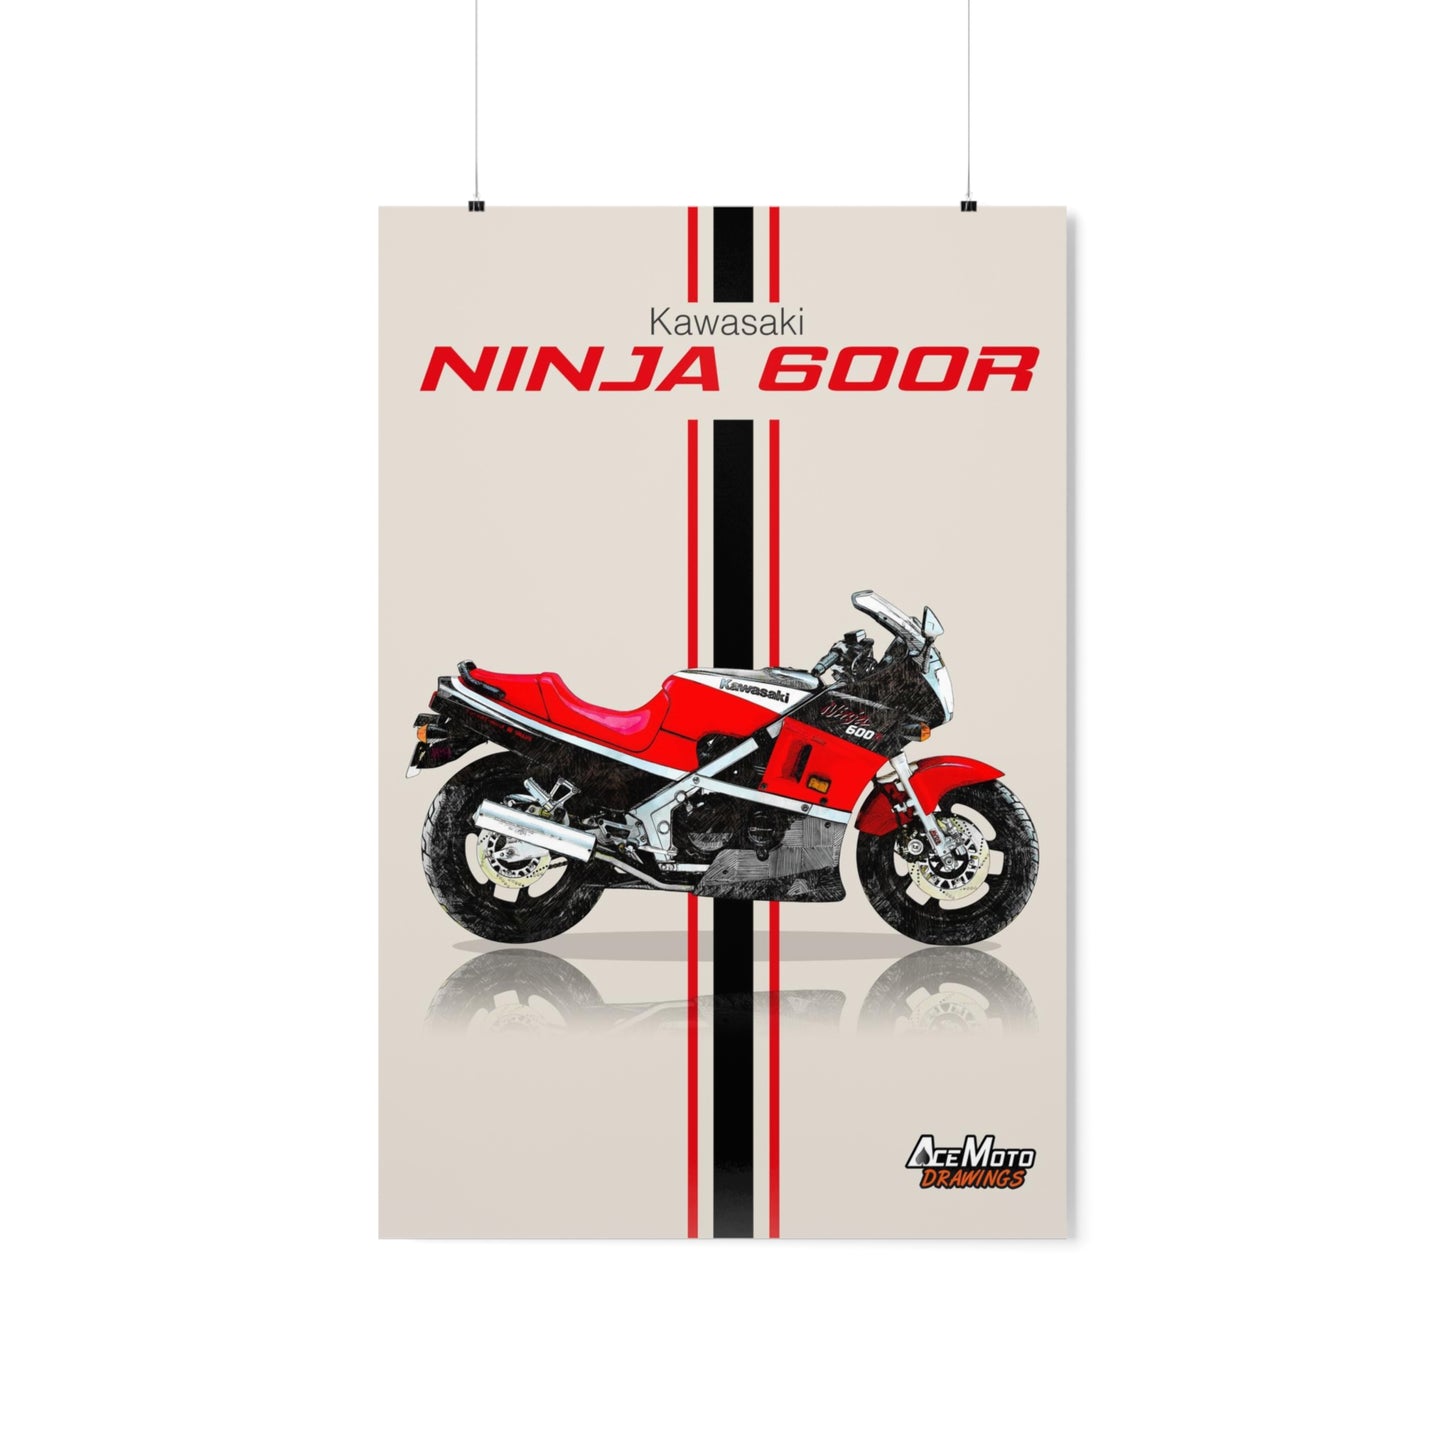 Kawasaki Ninja 600R - GPZ 600 | Wall Art - Frame Poster 1985